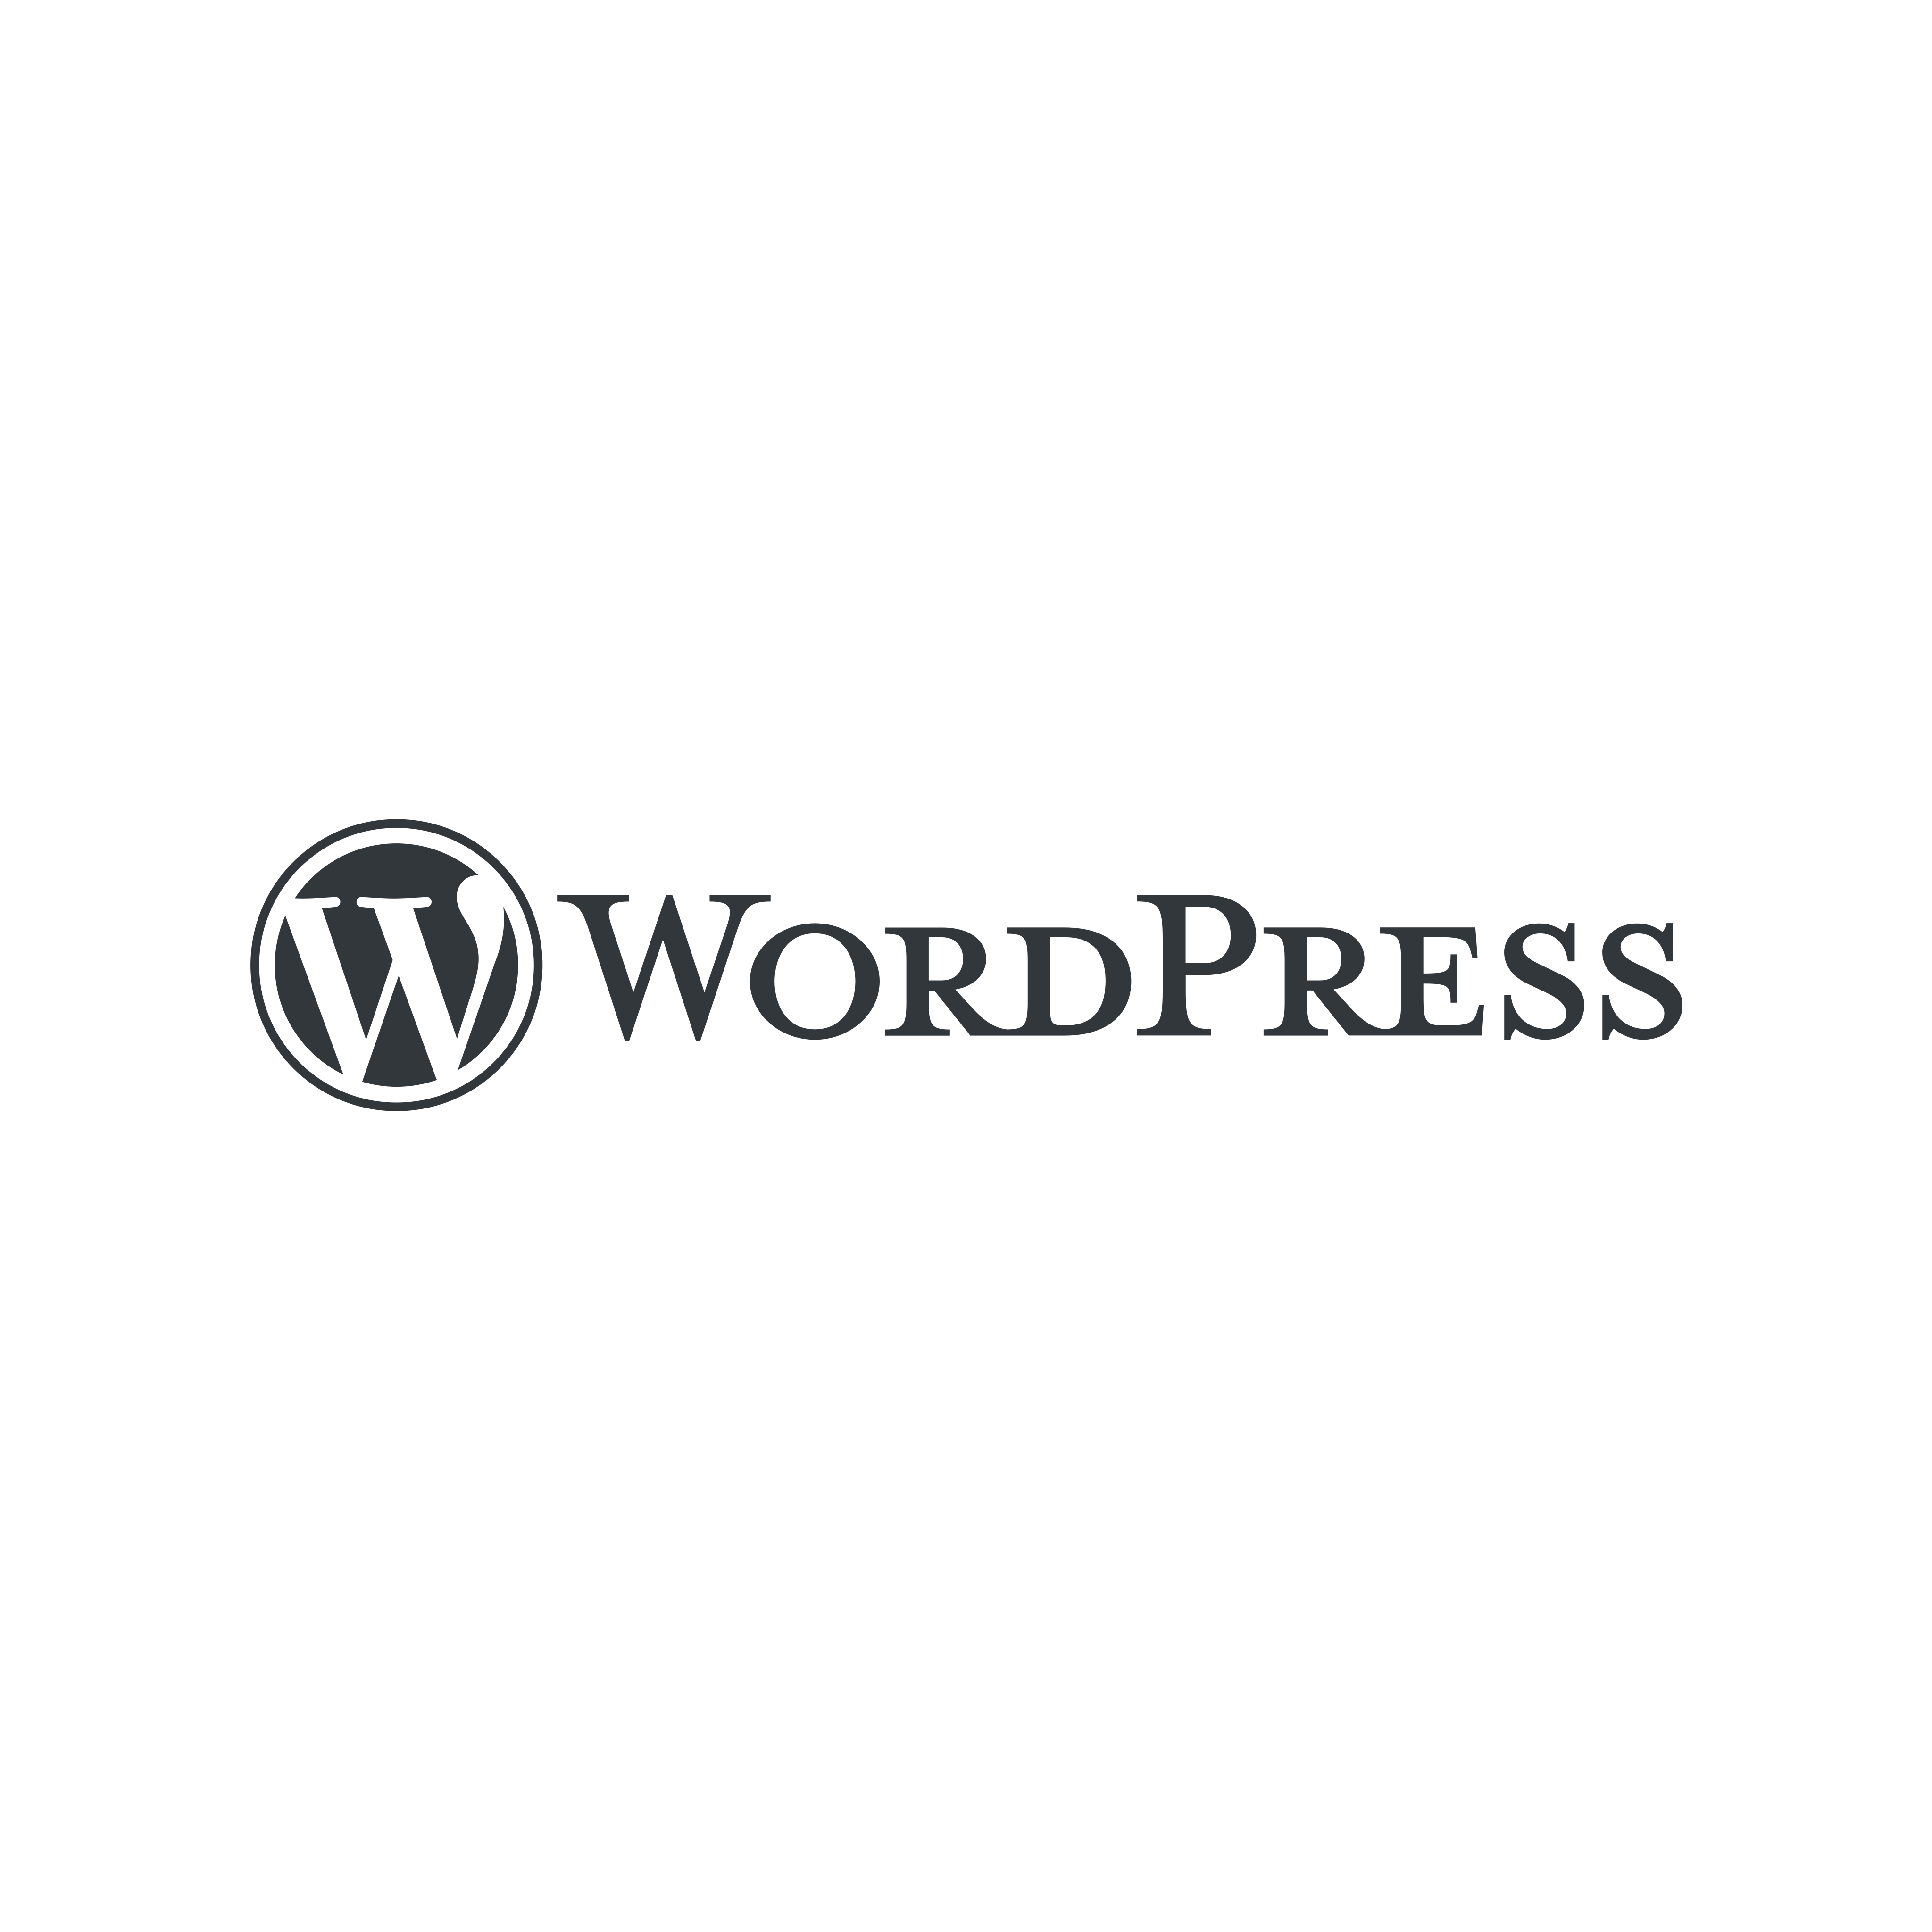 wordpress logo 0 - Wordpress Logo